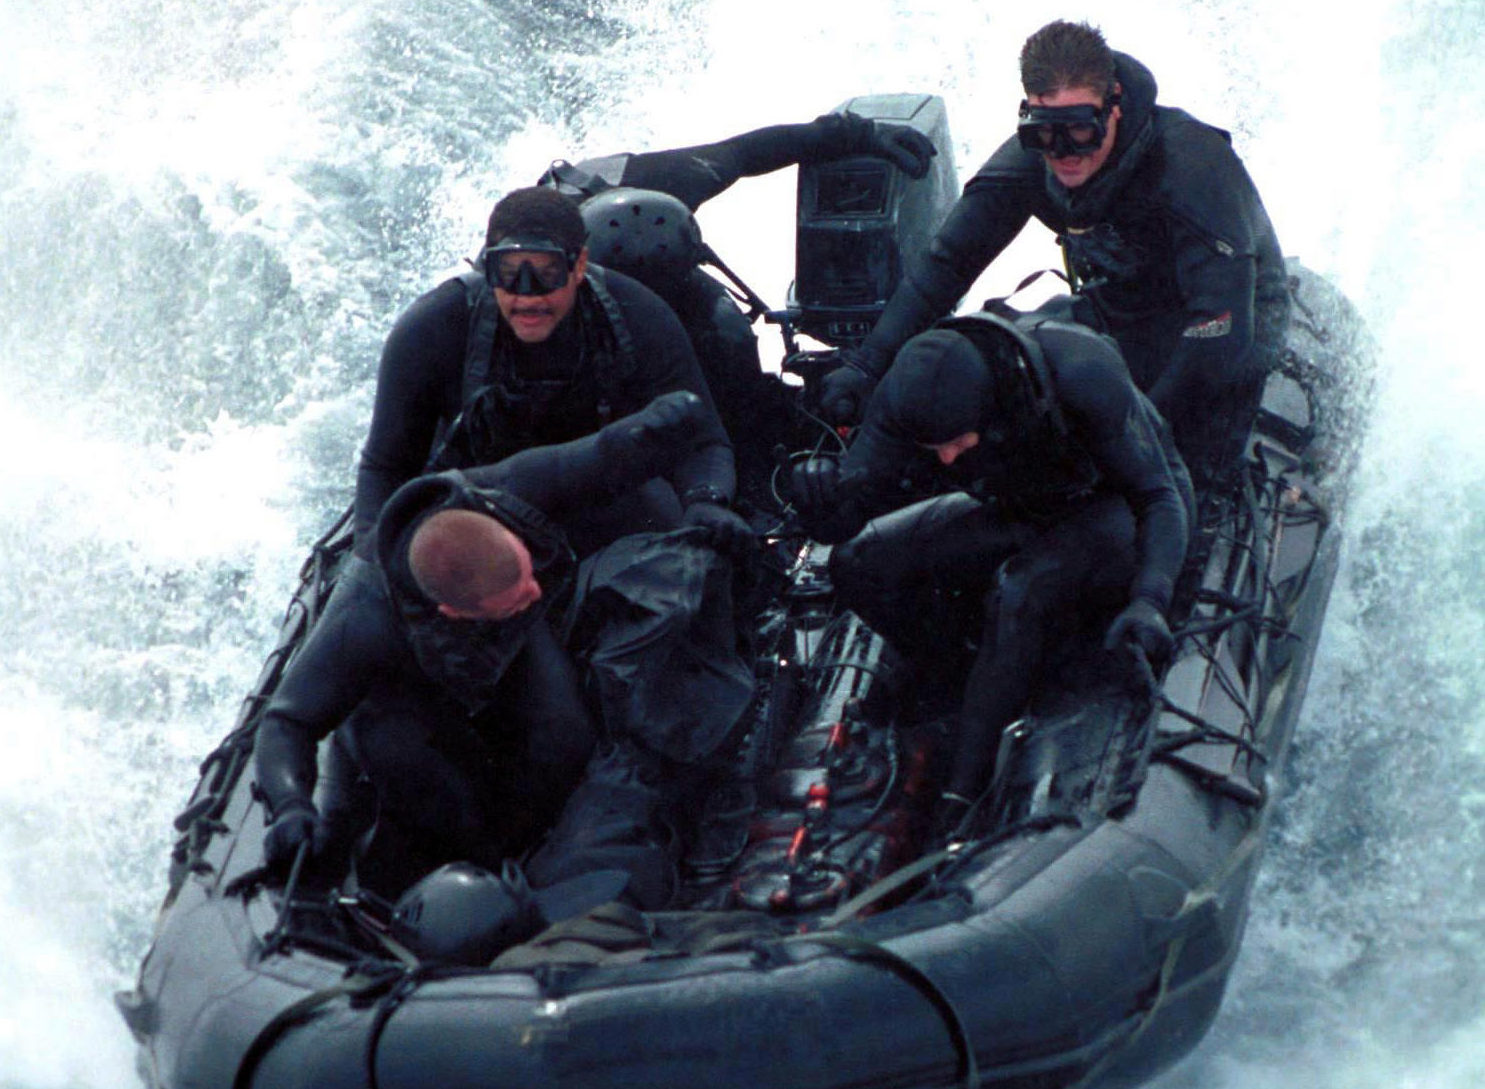 Combat_Rubber_Raiding_Craft_manned_by_SEAL-Team_5-e1550806204161.jpg